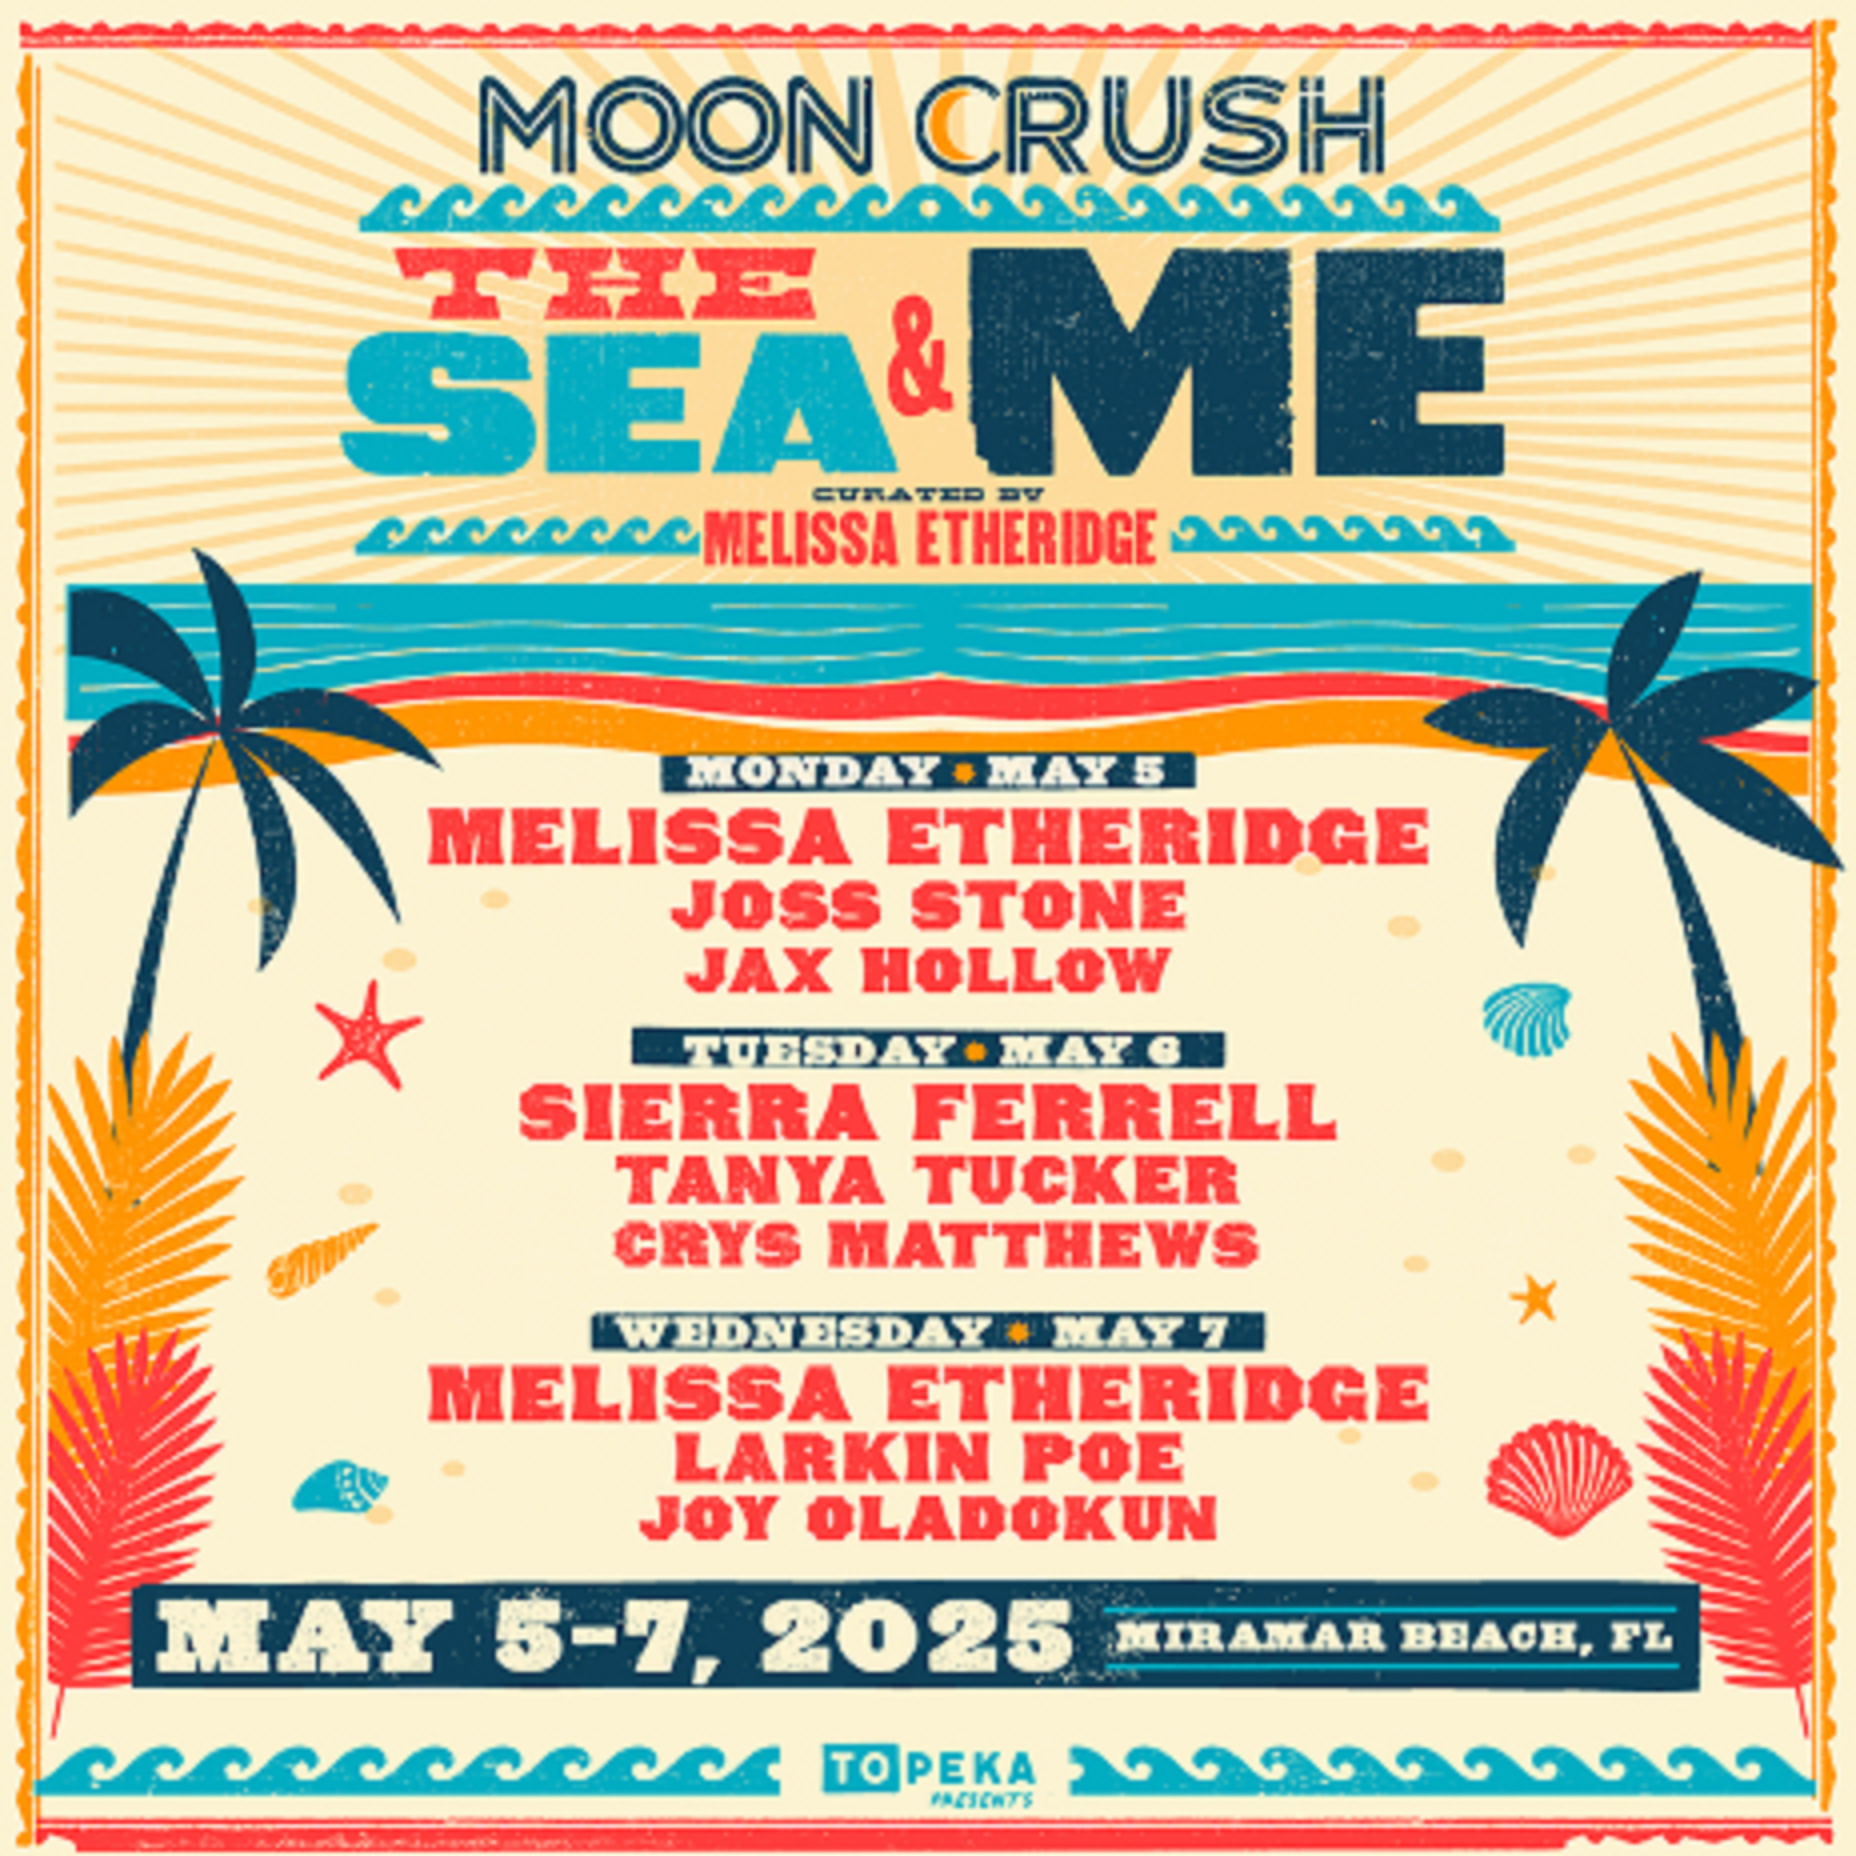 Topeka and Melissa Etheridge Announce Moon Crush "The Sea & ME" Music Vacation